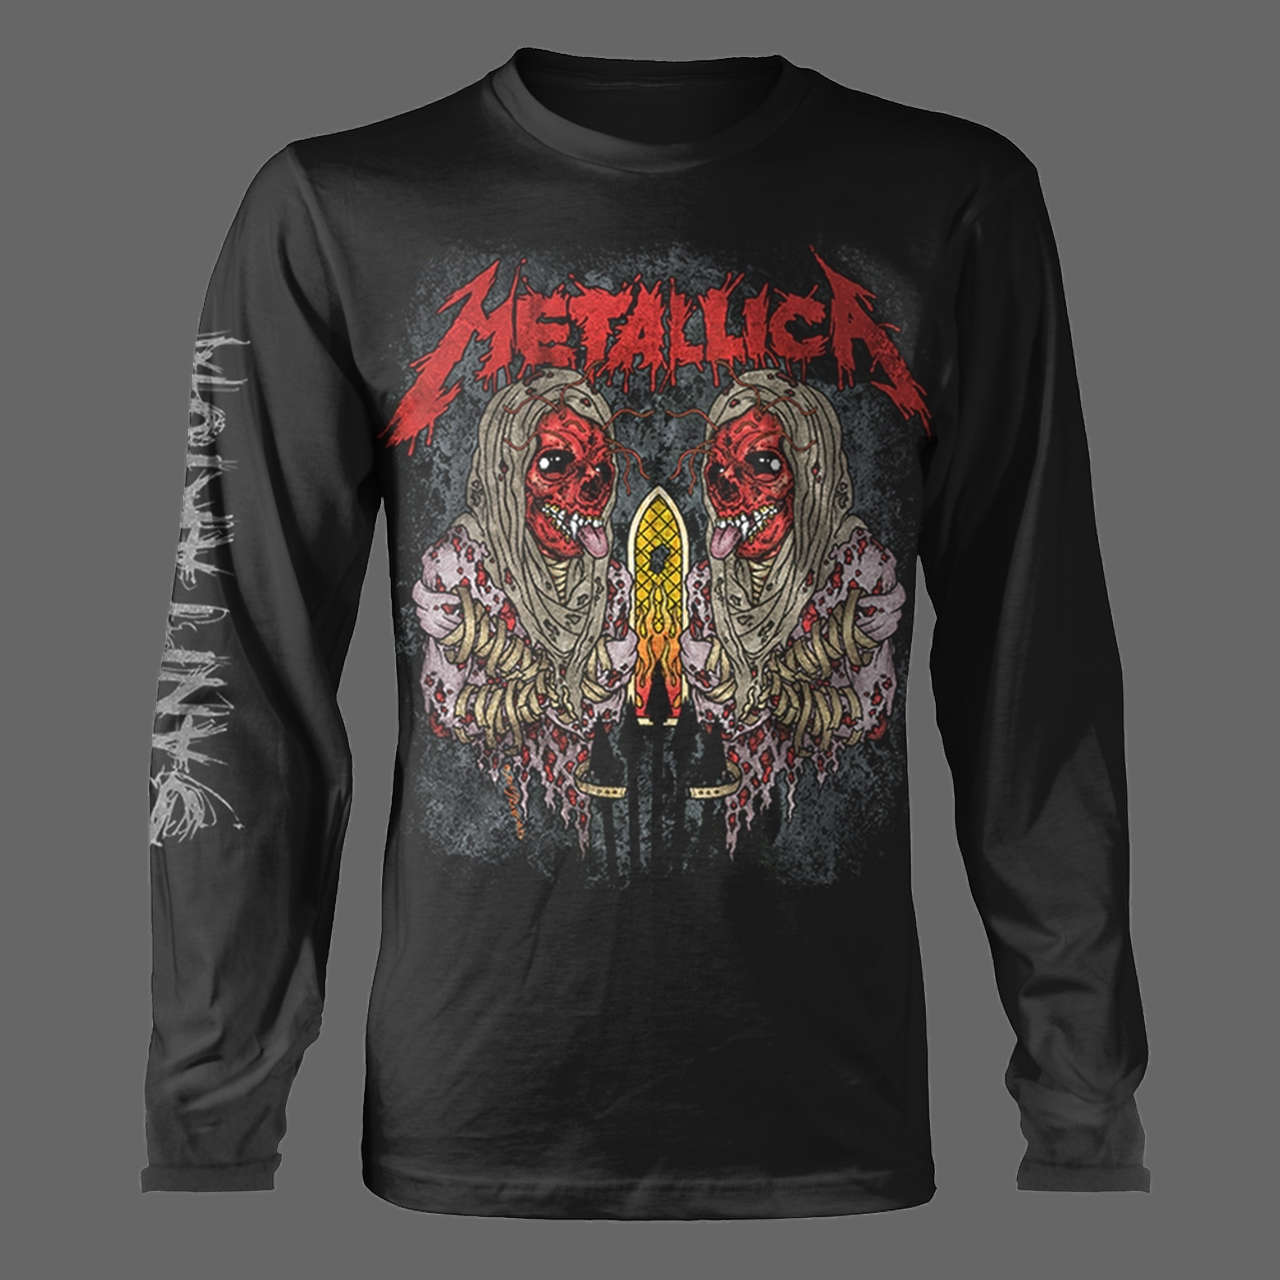 Metallica - Sanitarium (Long Sleeve T-Shirt)